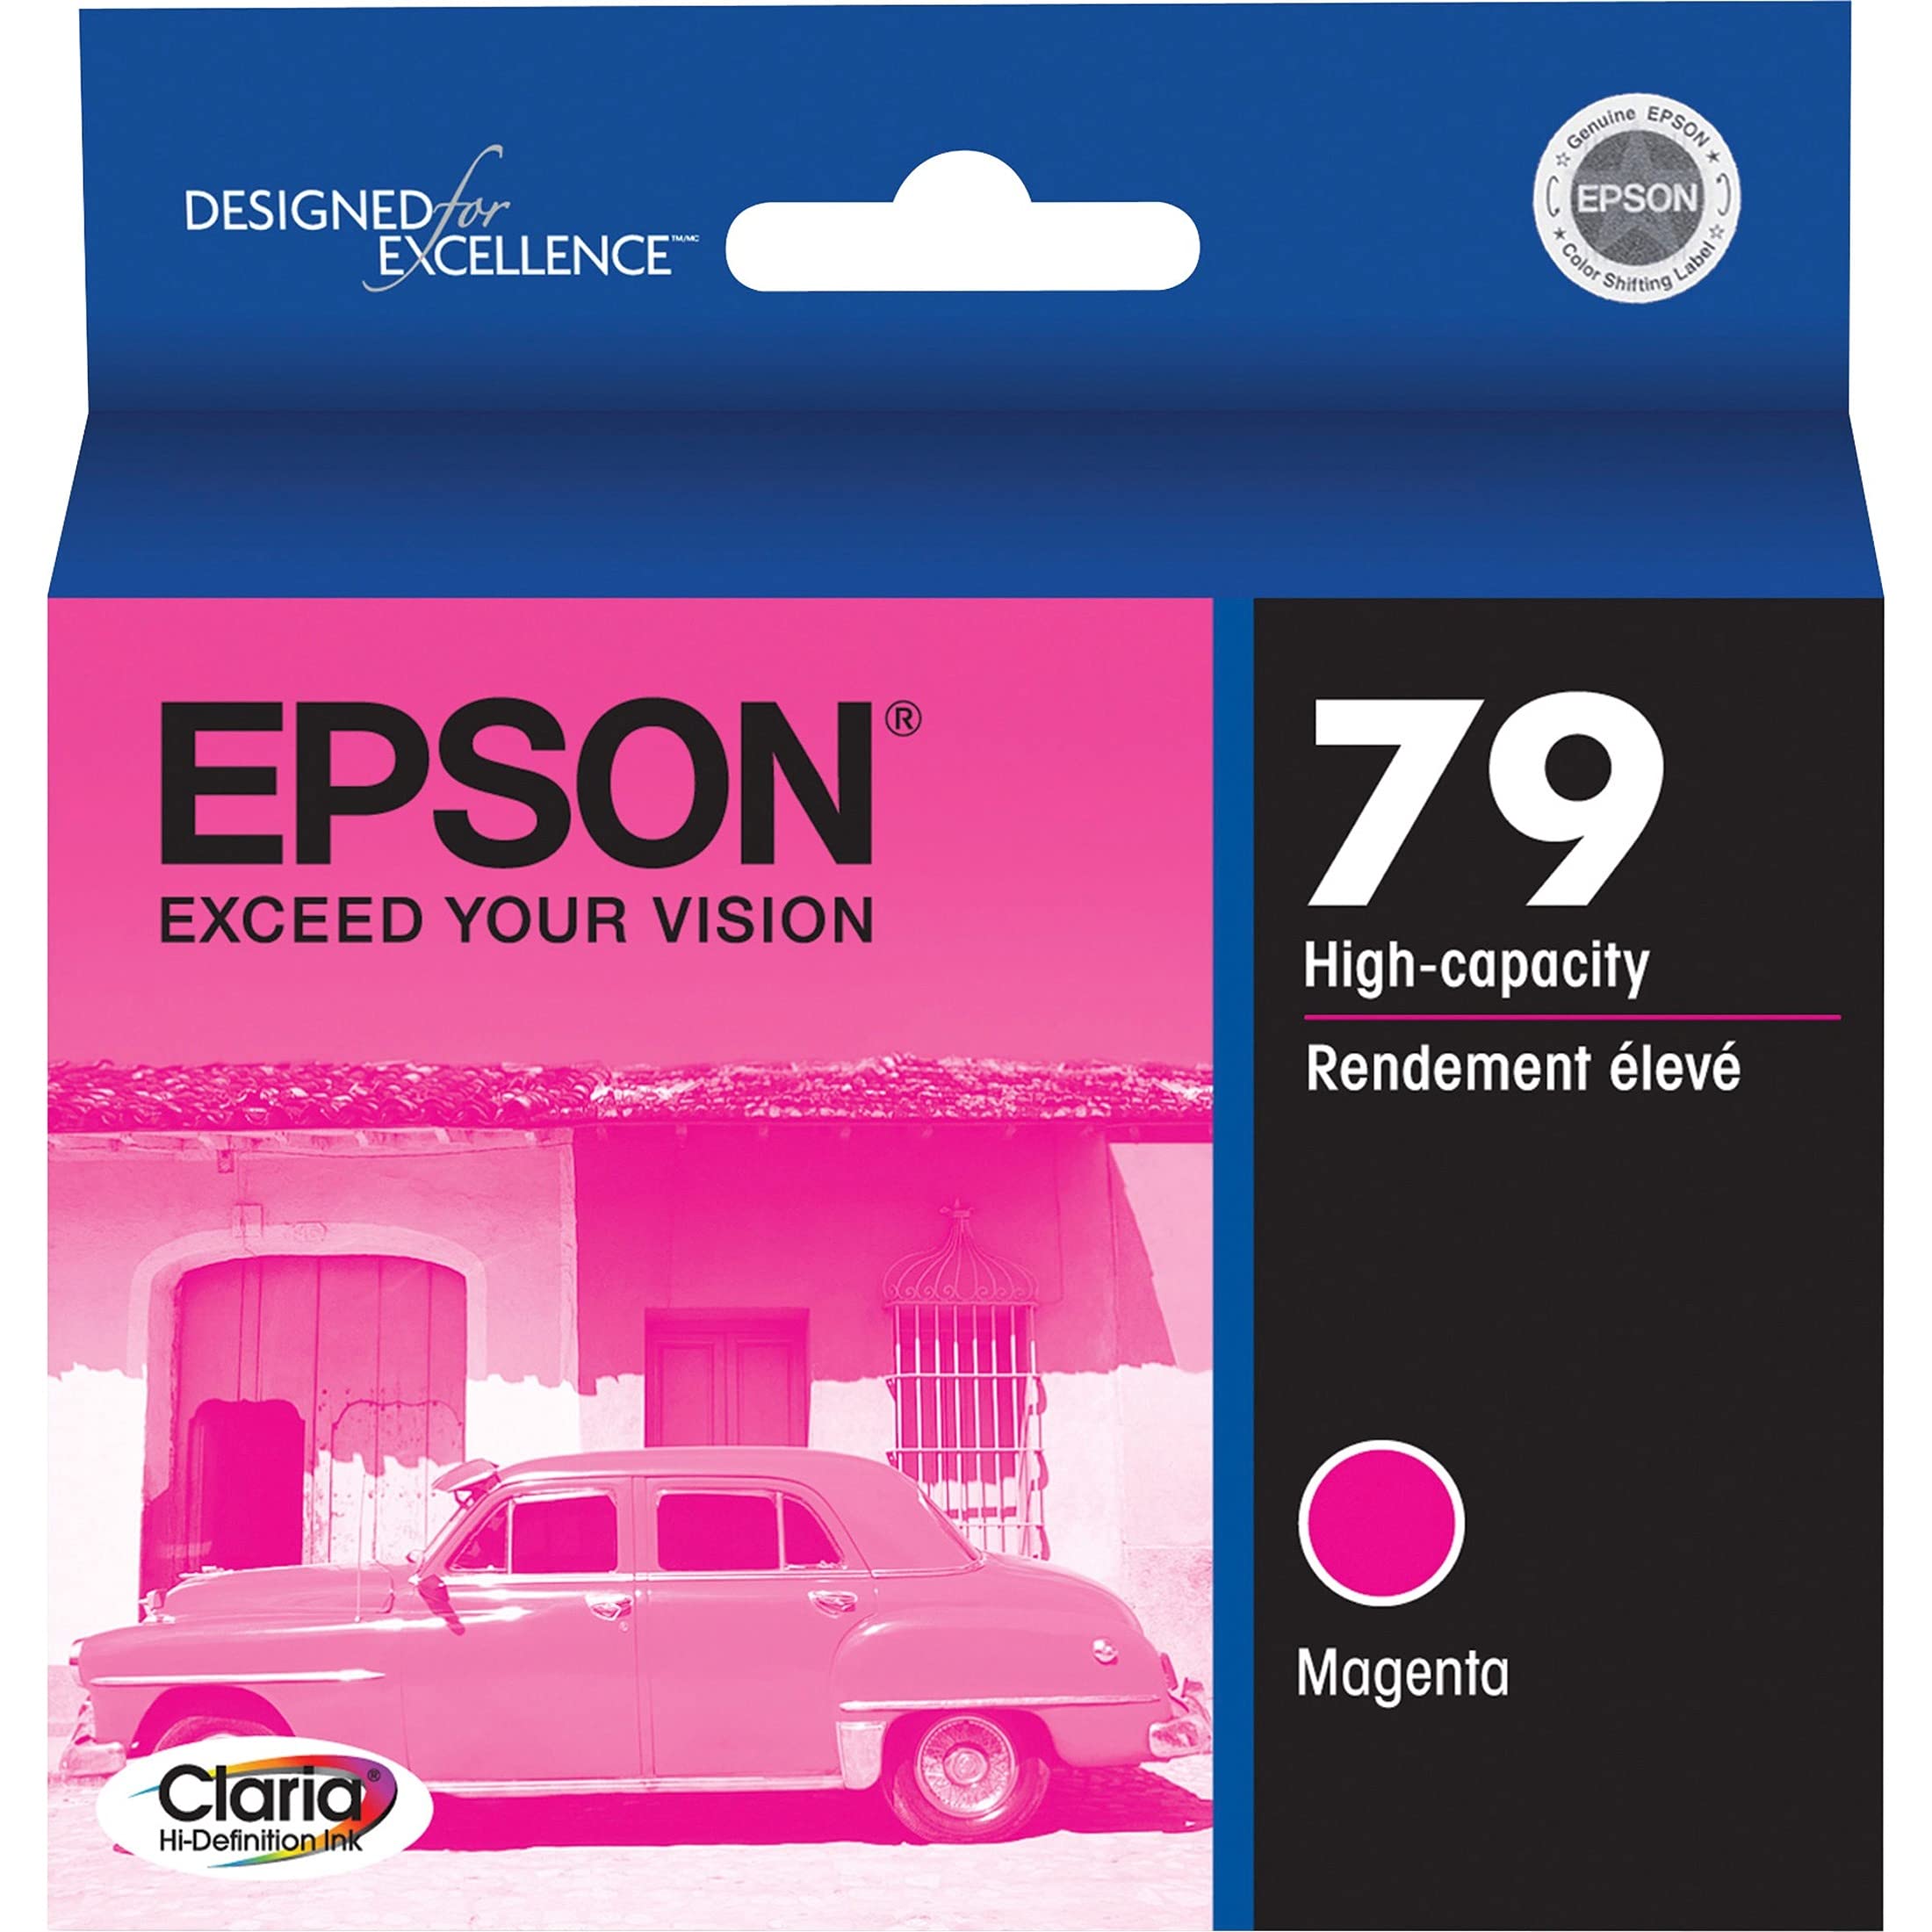 Absolute Toner Epson 79 Original Genuine OEM Cyan High Yield Ink Cartridge | T079320 Original Epson Cartridges